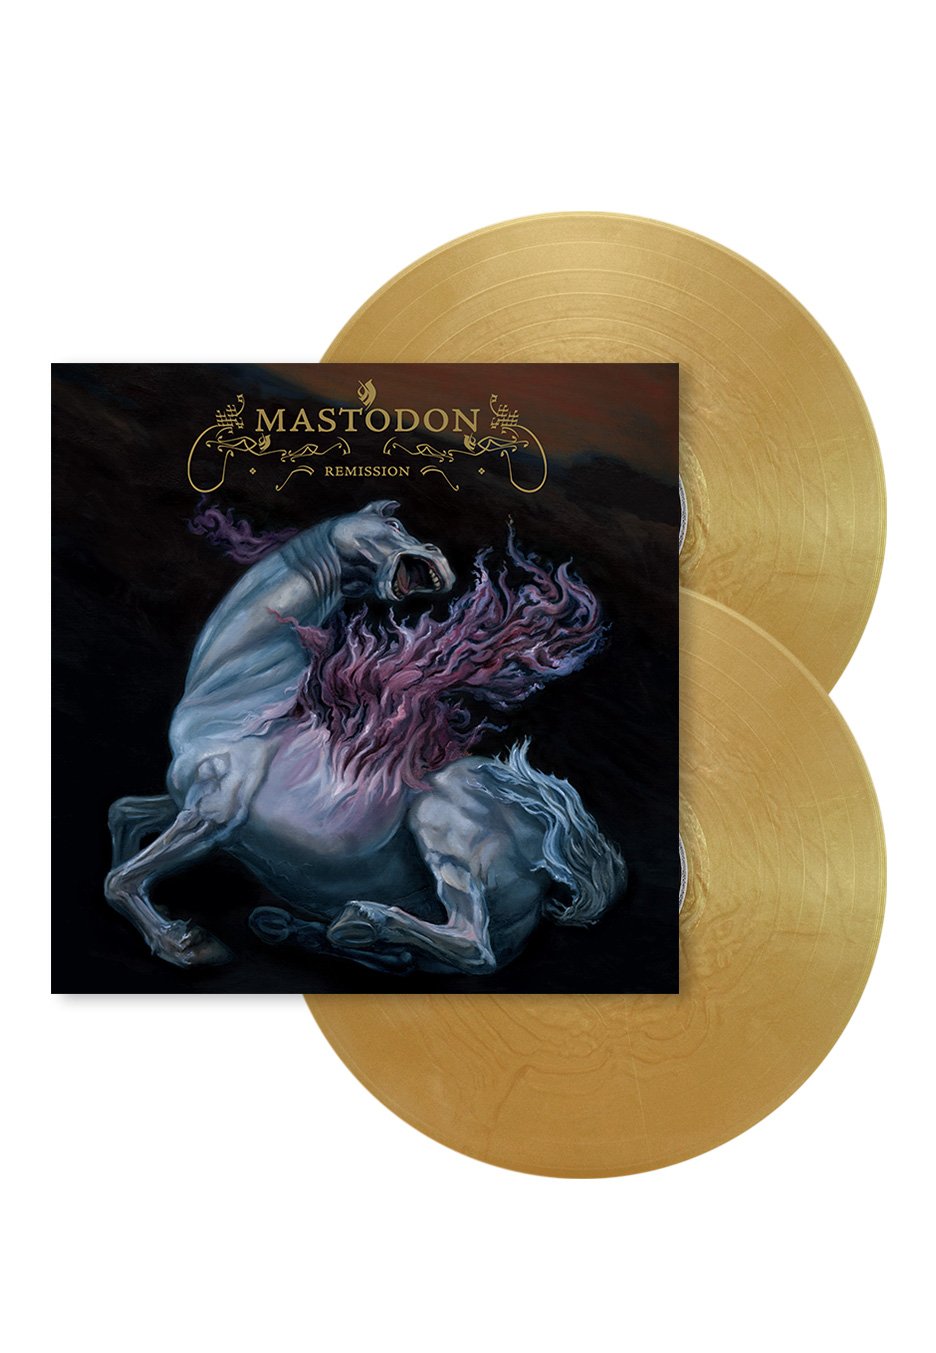 Mastodon - Remission Gold Nugget - Colored 2 Vinyl